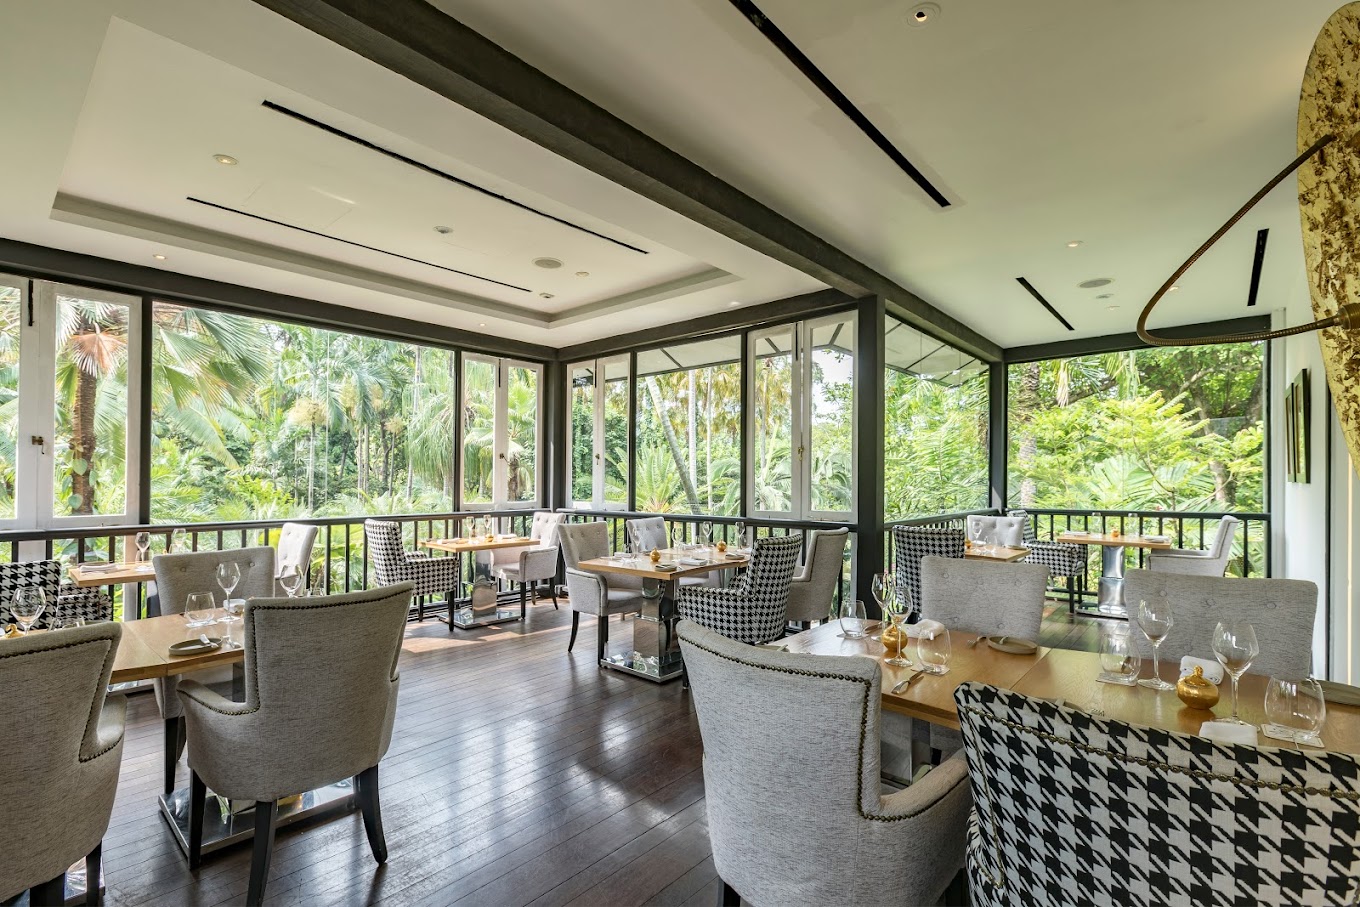 Corner House - Top 25 Restaurants in Singapore